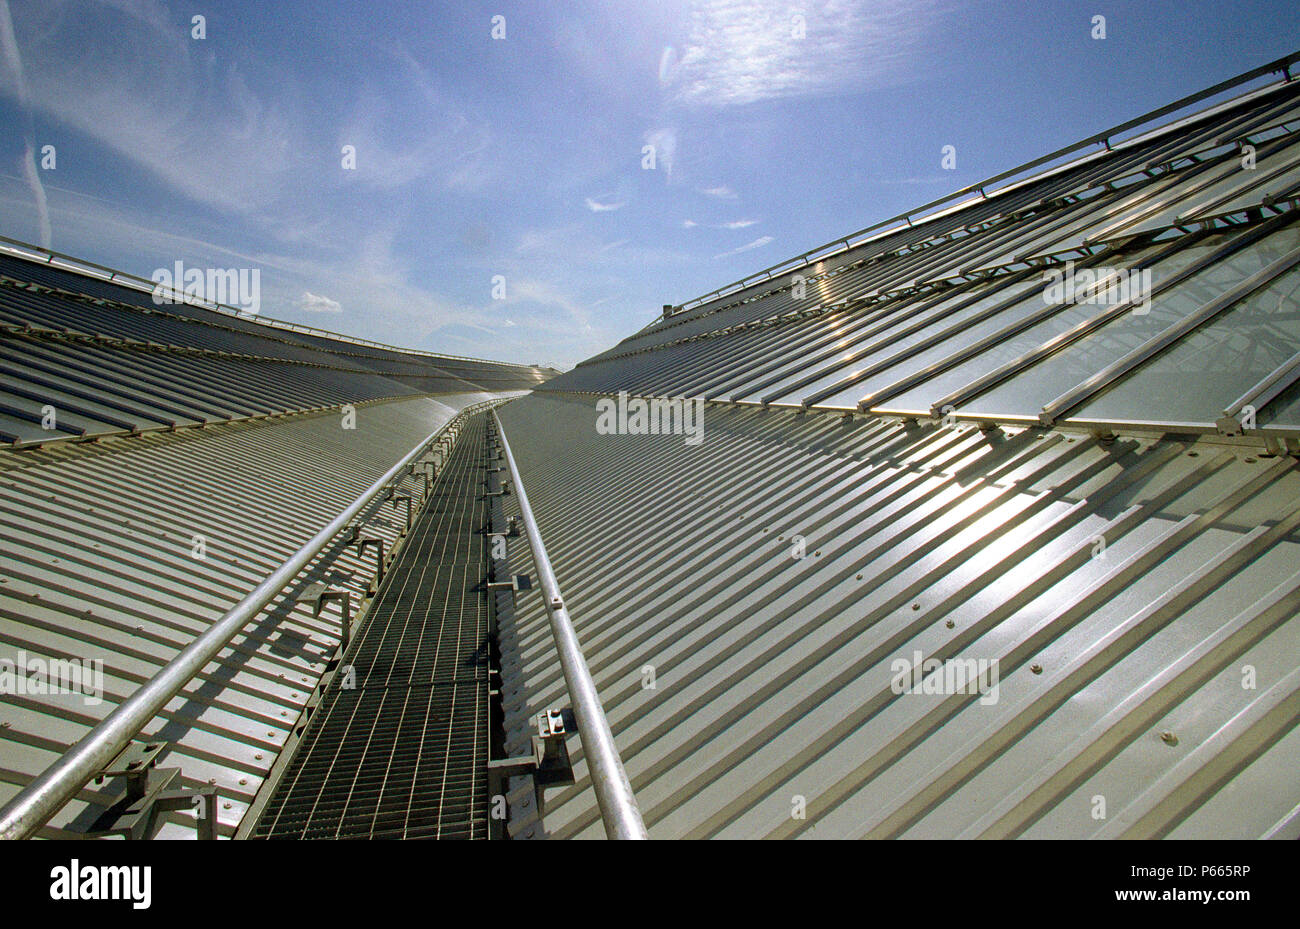 New roof, Waterloo Station, London. Stock Photo